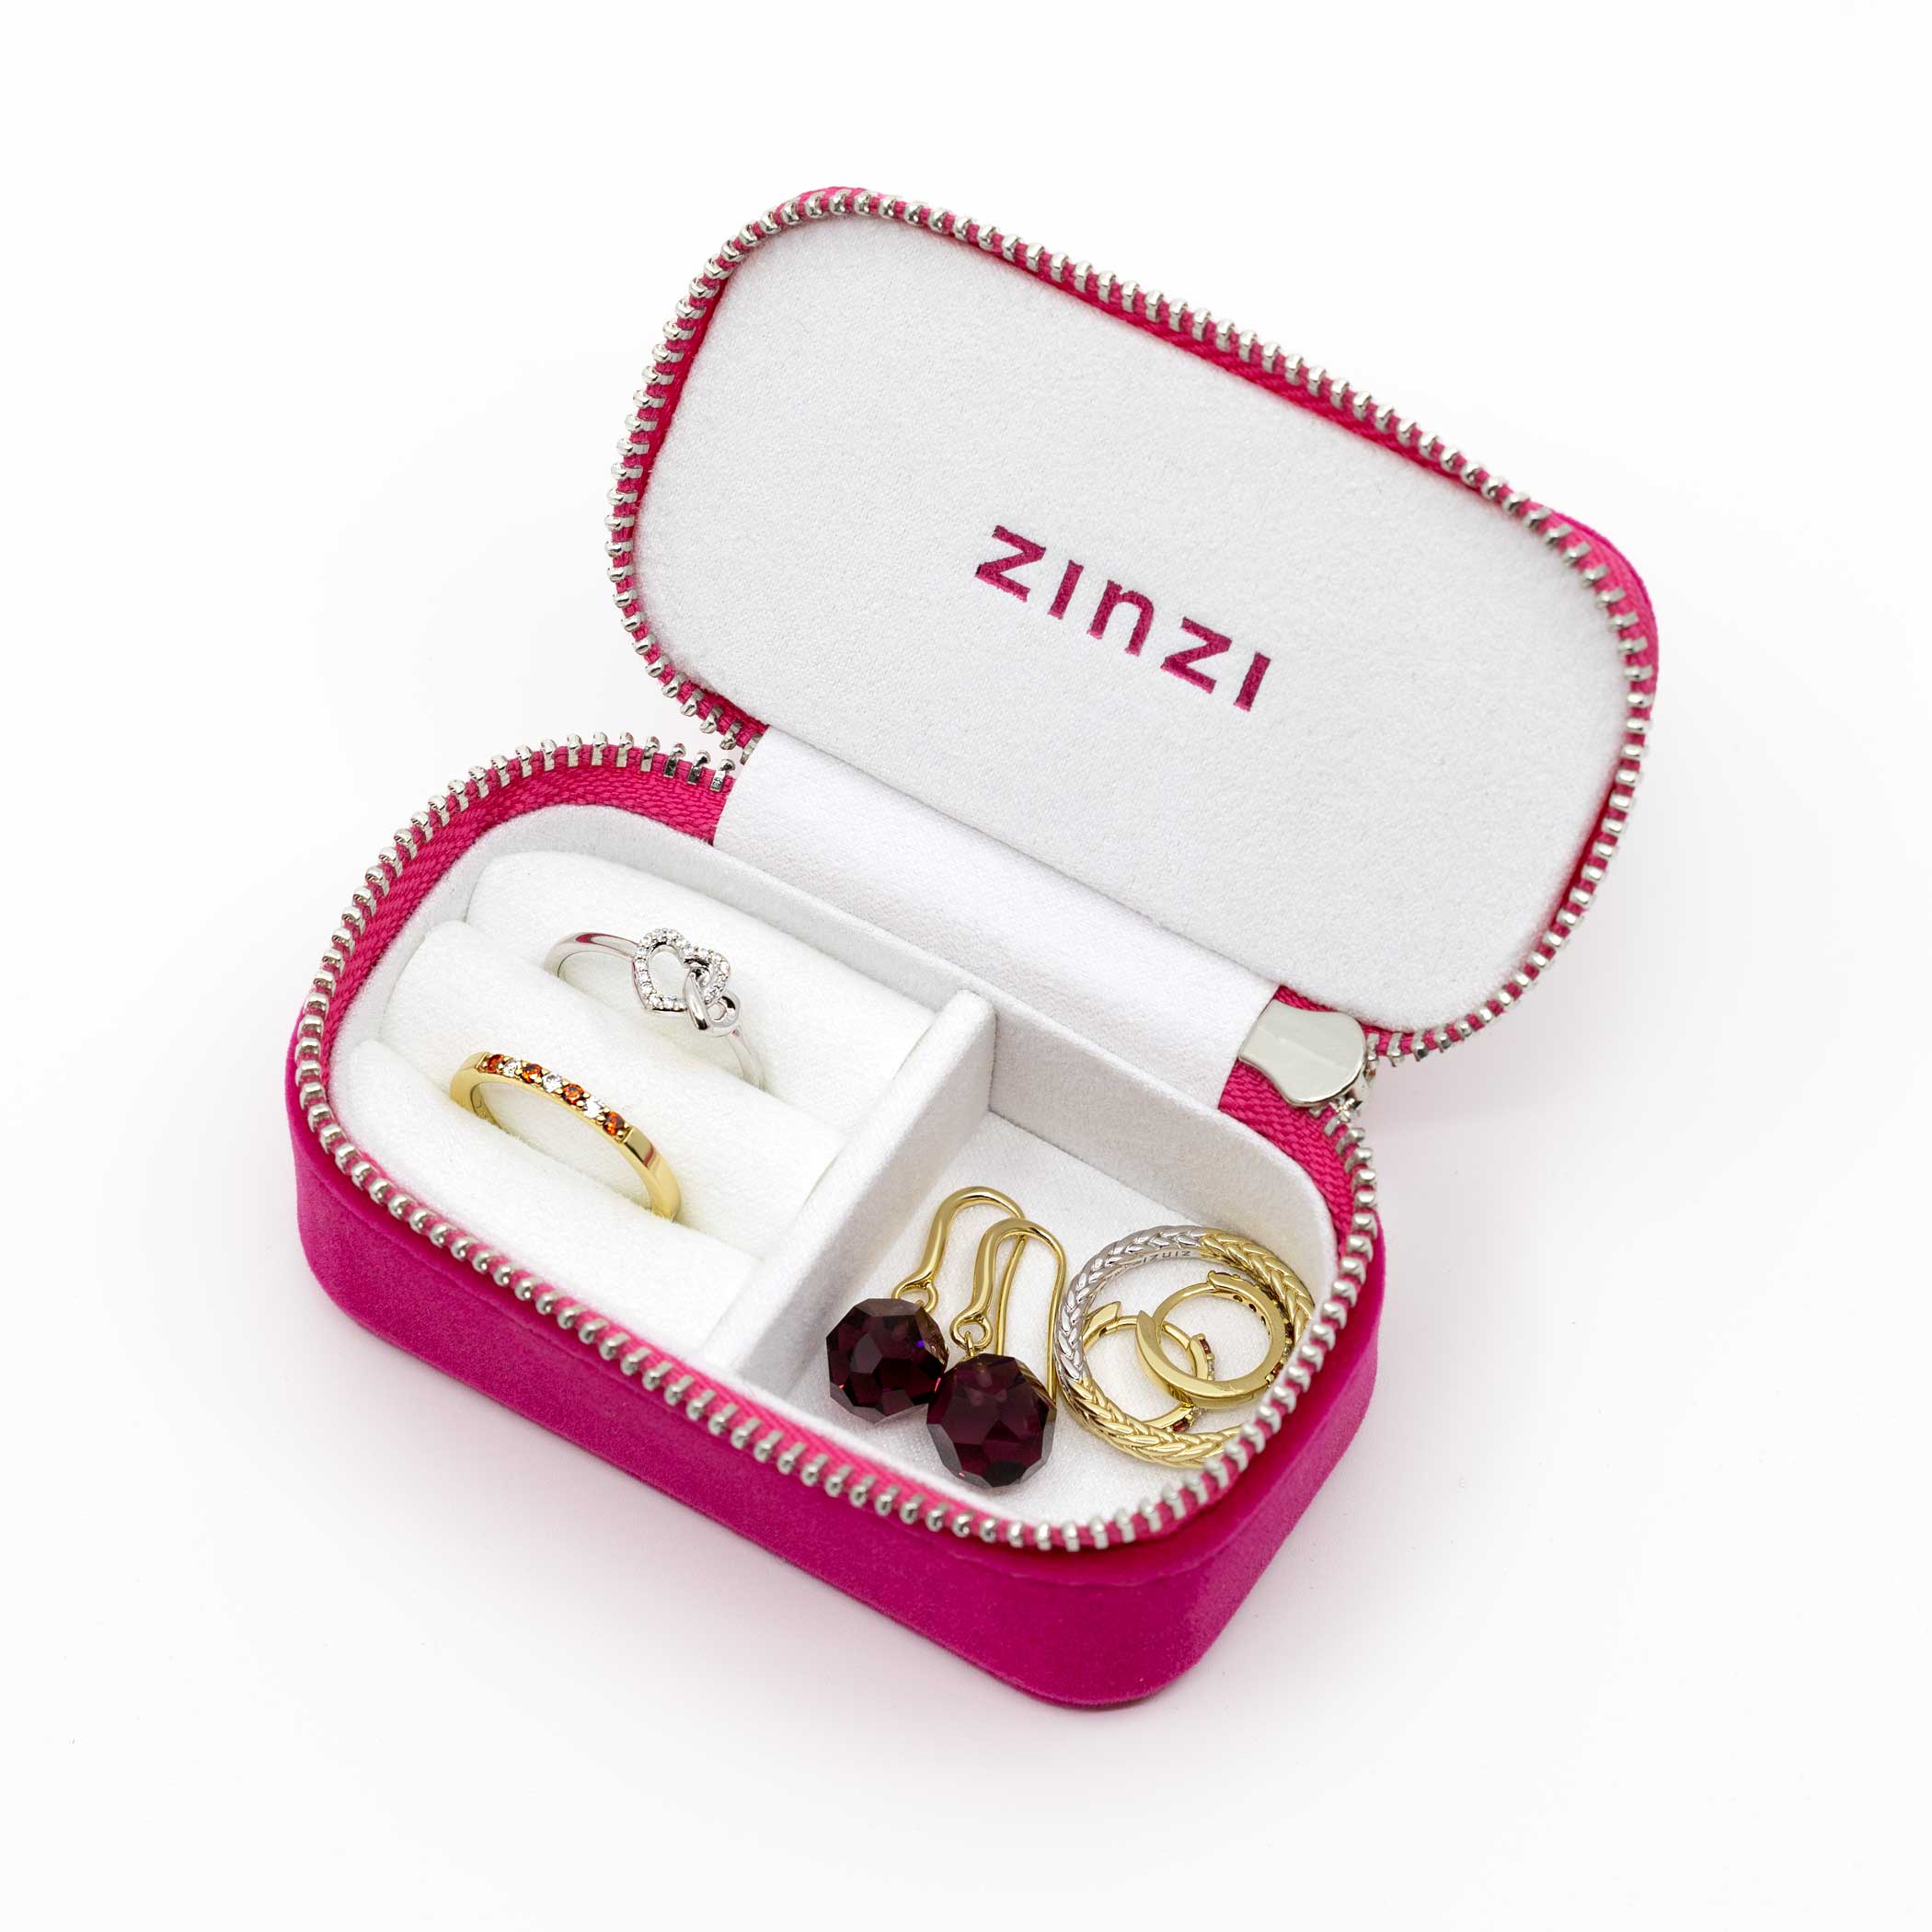 Zinzi storage box in pink suede with zipper closure, nice convenient size